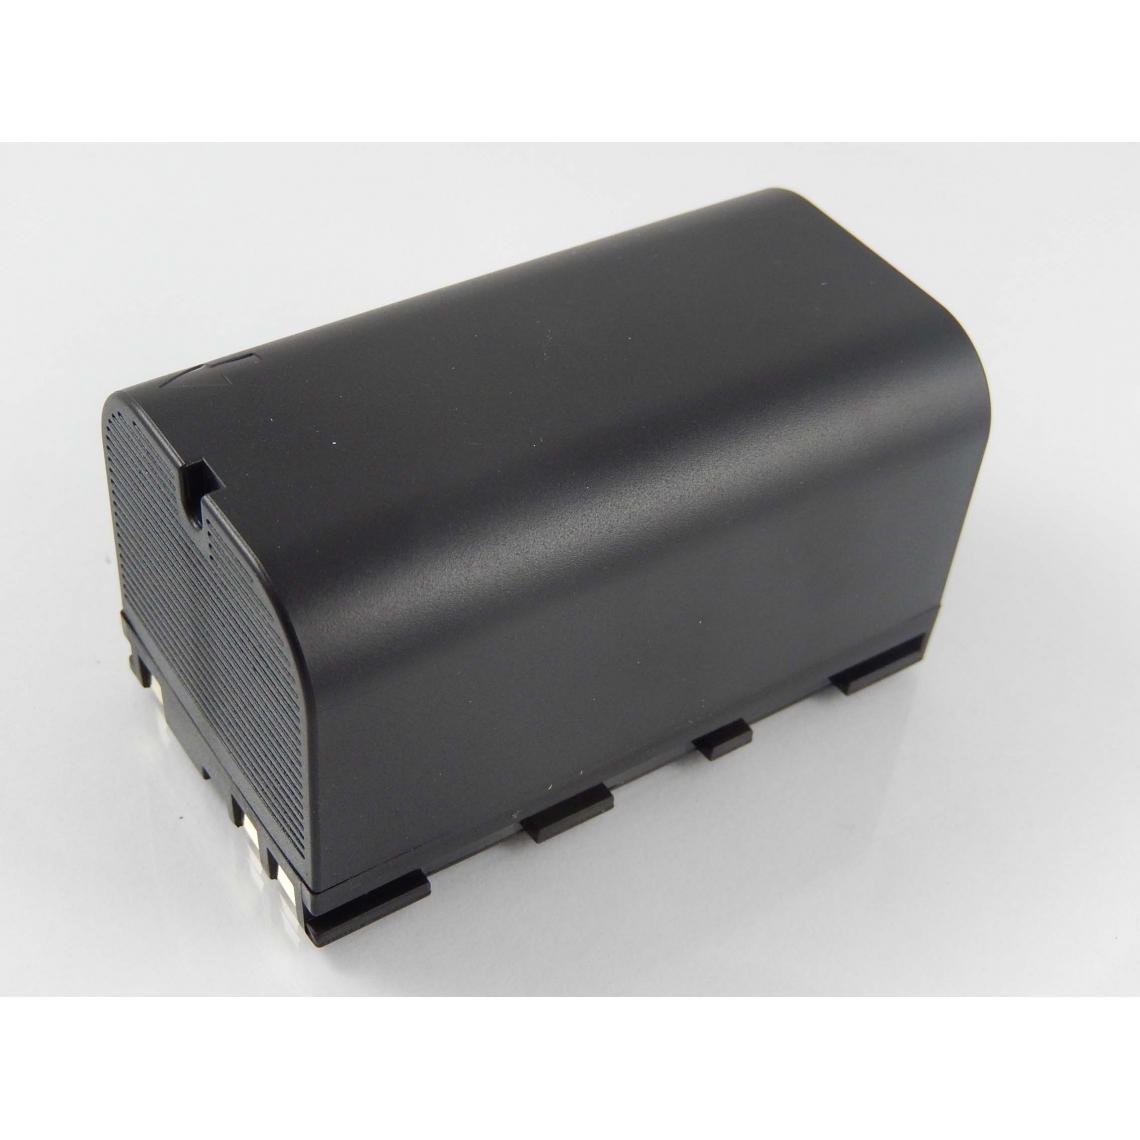 Vhbw - vhbw Batterie compatible avec Leica Piper 200 Laser dispositif de mesure laser, outil de mesure (5600mAh, 7,4V, Li-ion) - Piles rechargeables